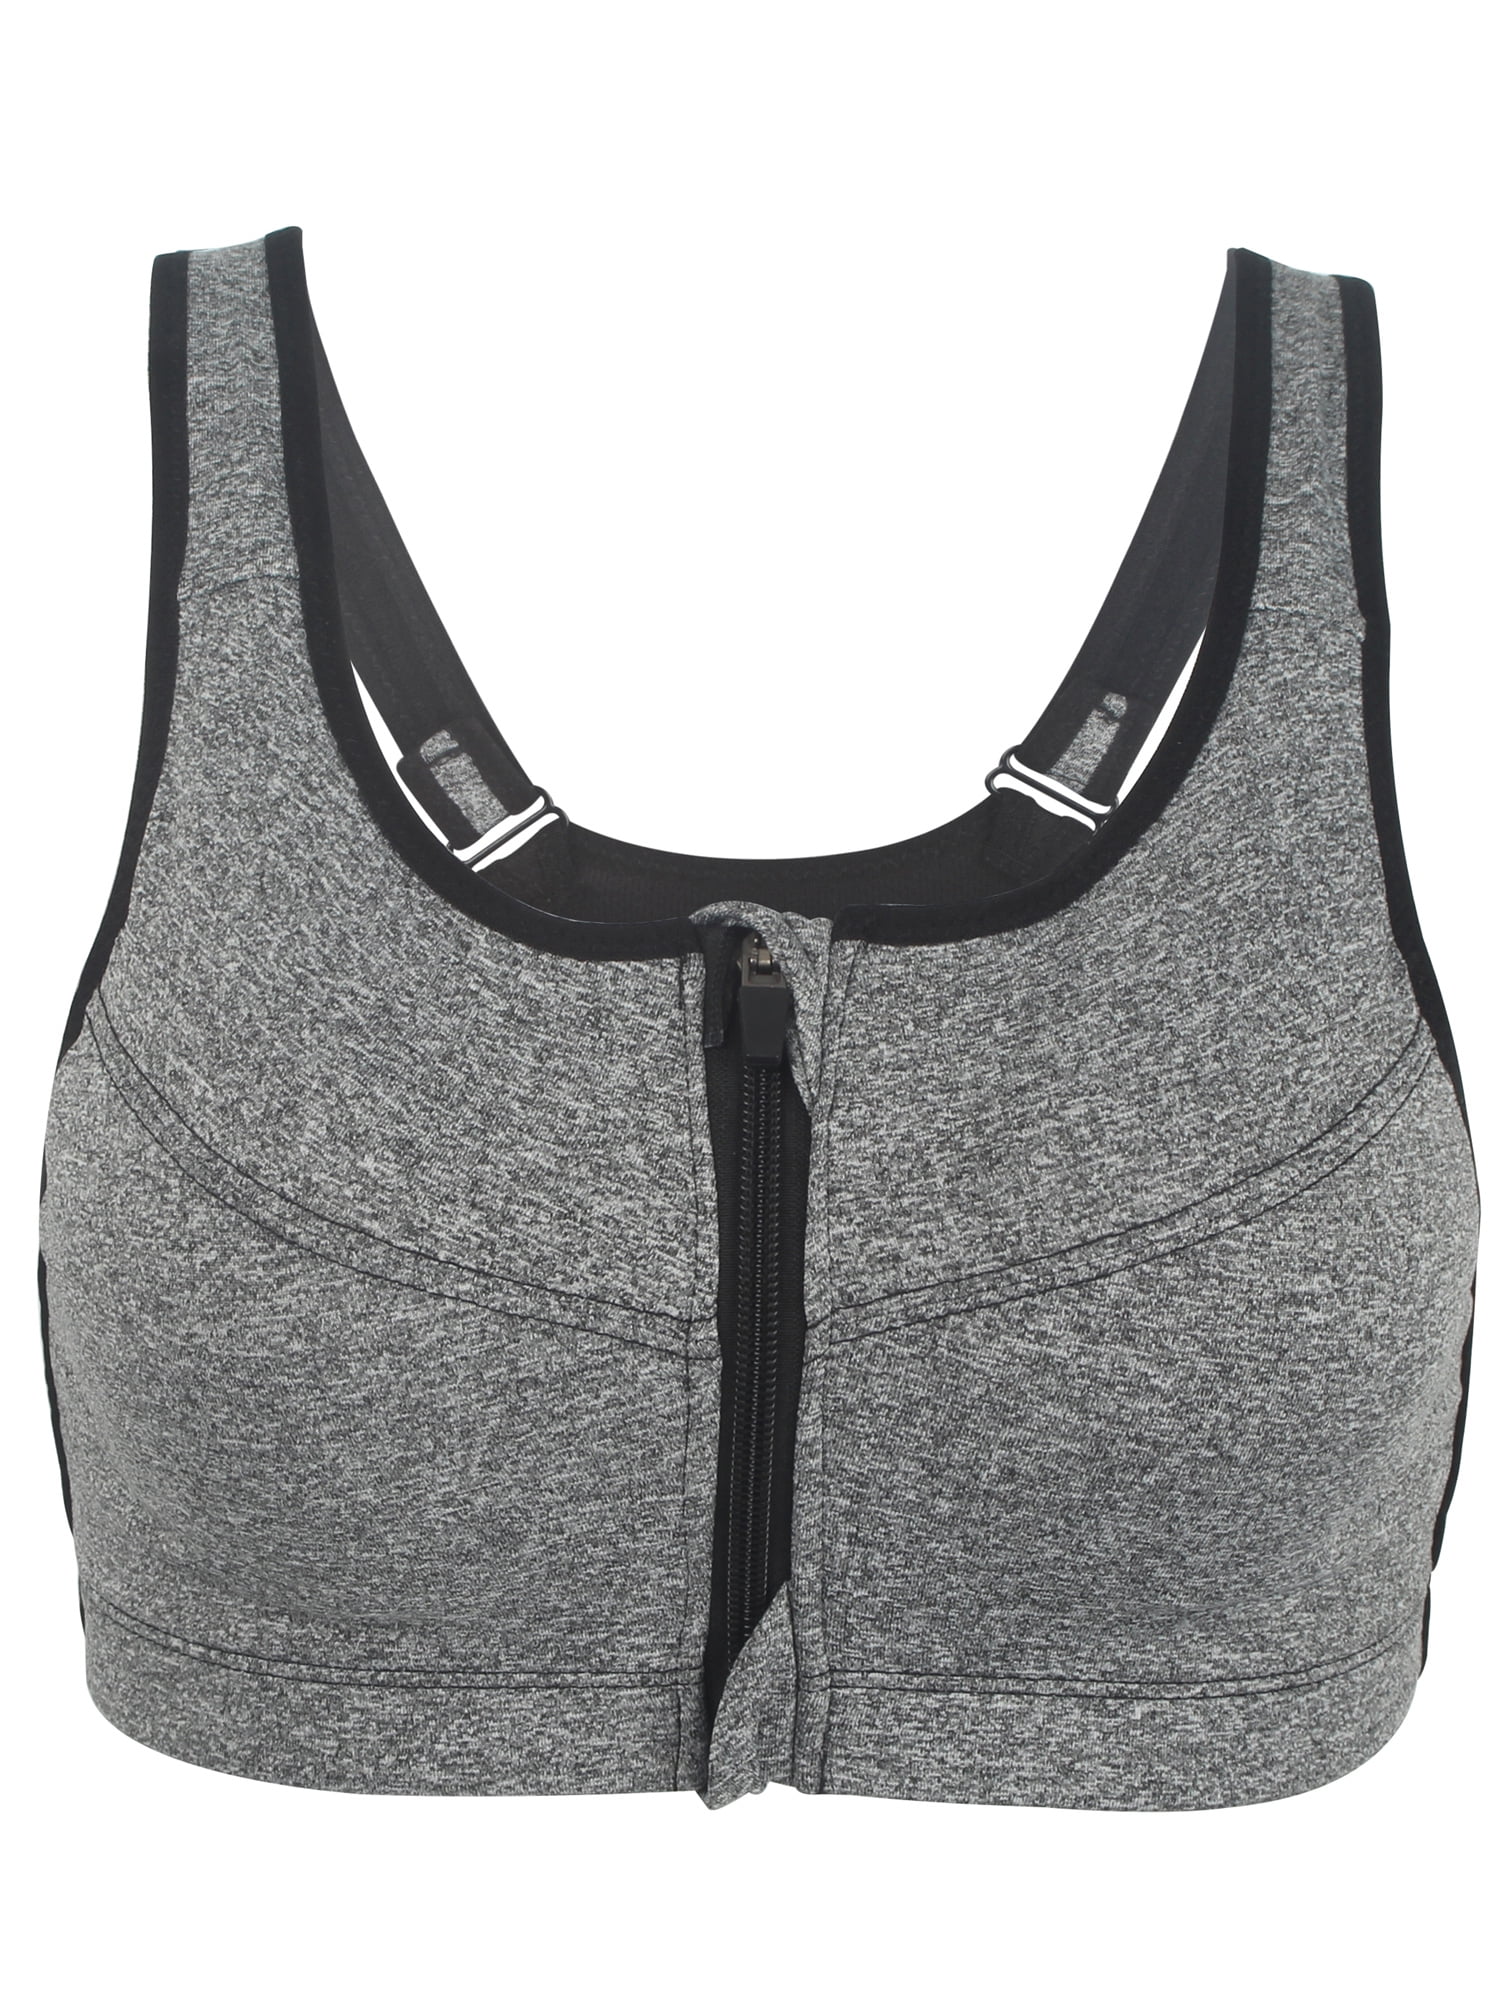 DODOING Women's Sports Bra High Impact Push Up Zipper Front Closure Padded  Bras Fitness Yoga Bras